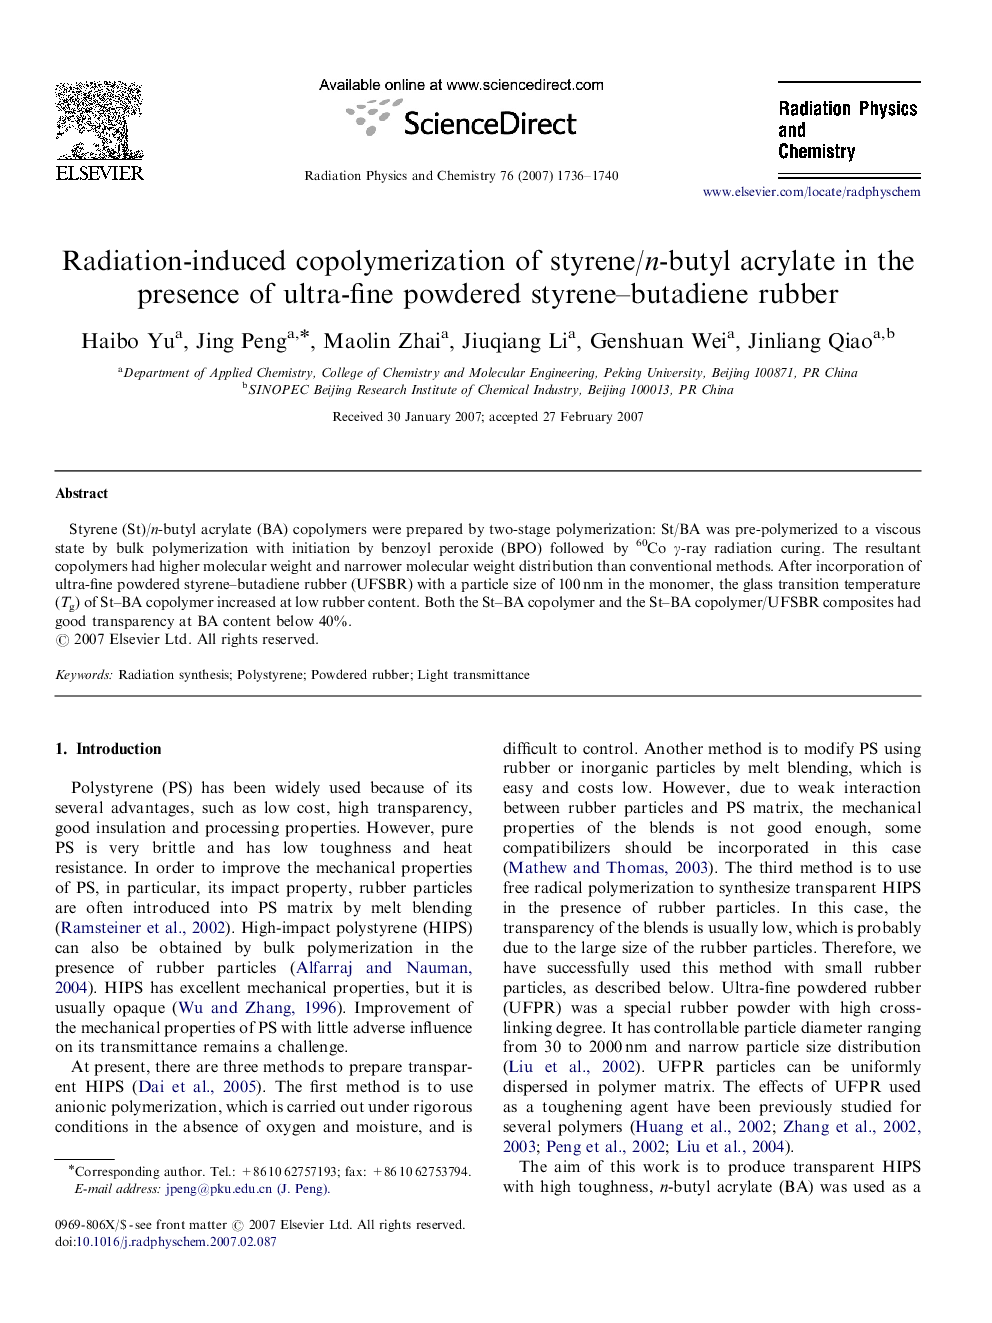 Radiation-induced copolymerization of styrene/n-butyl acrylate in the presence of ultra-fine powdered styrene–butadiene rubber